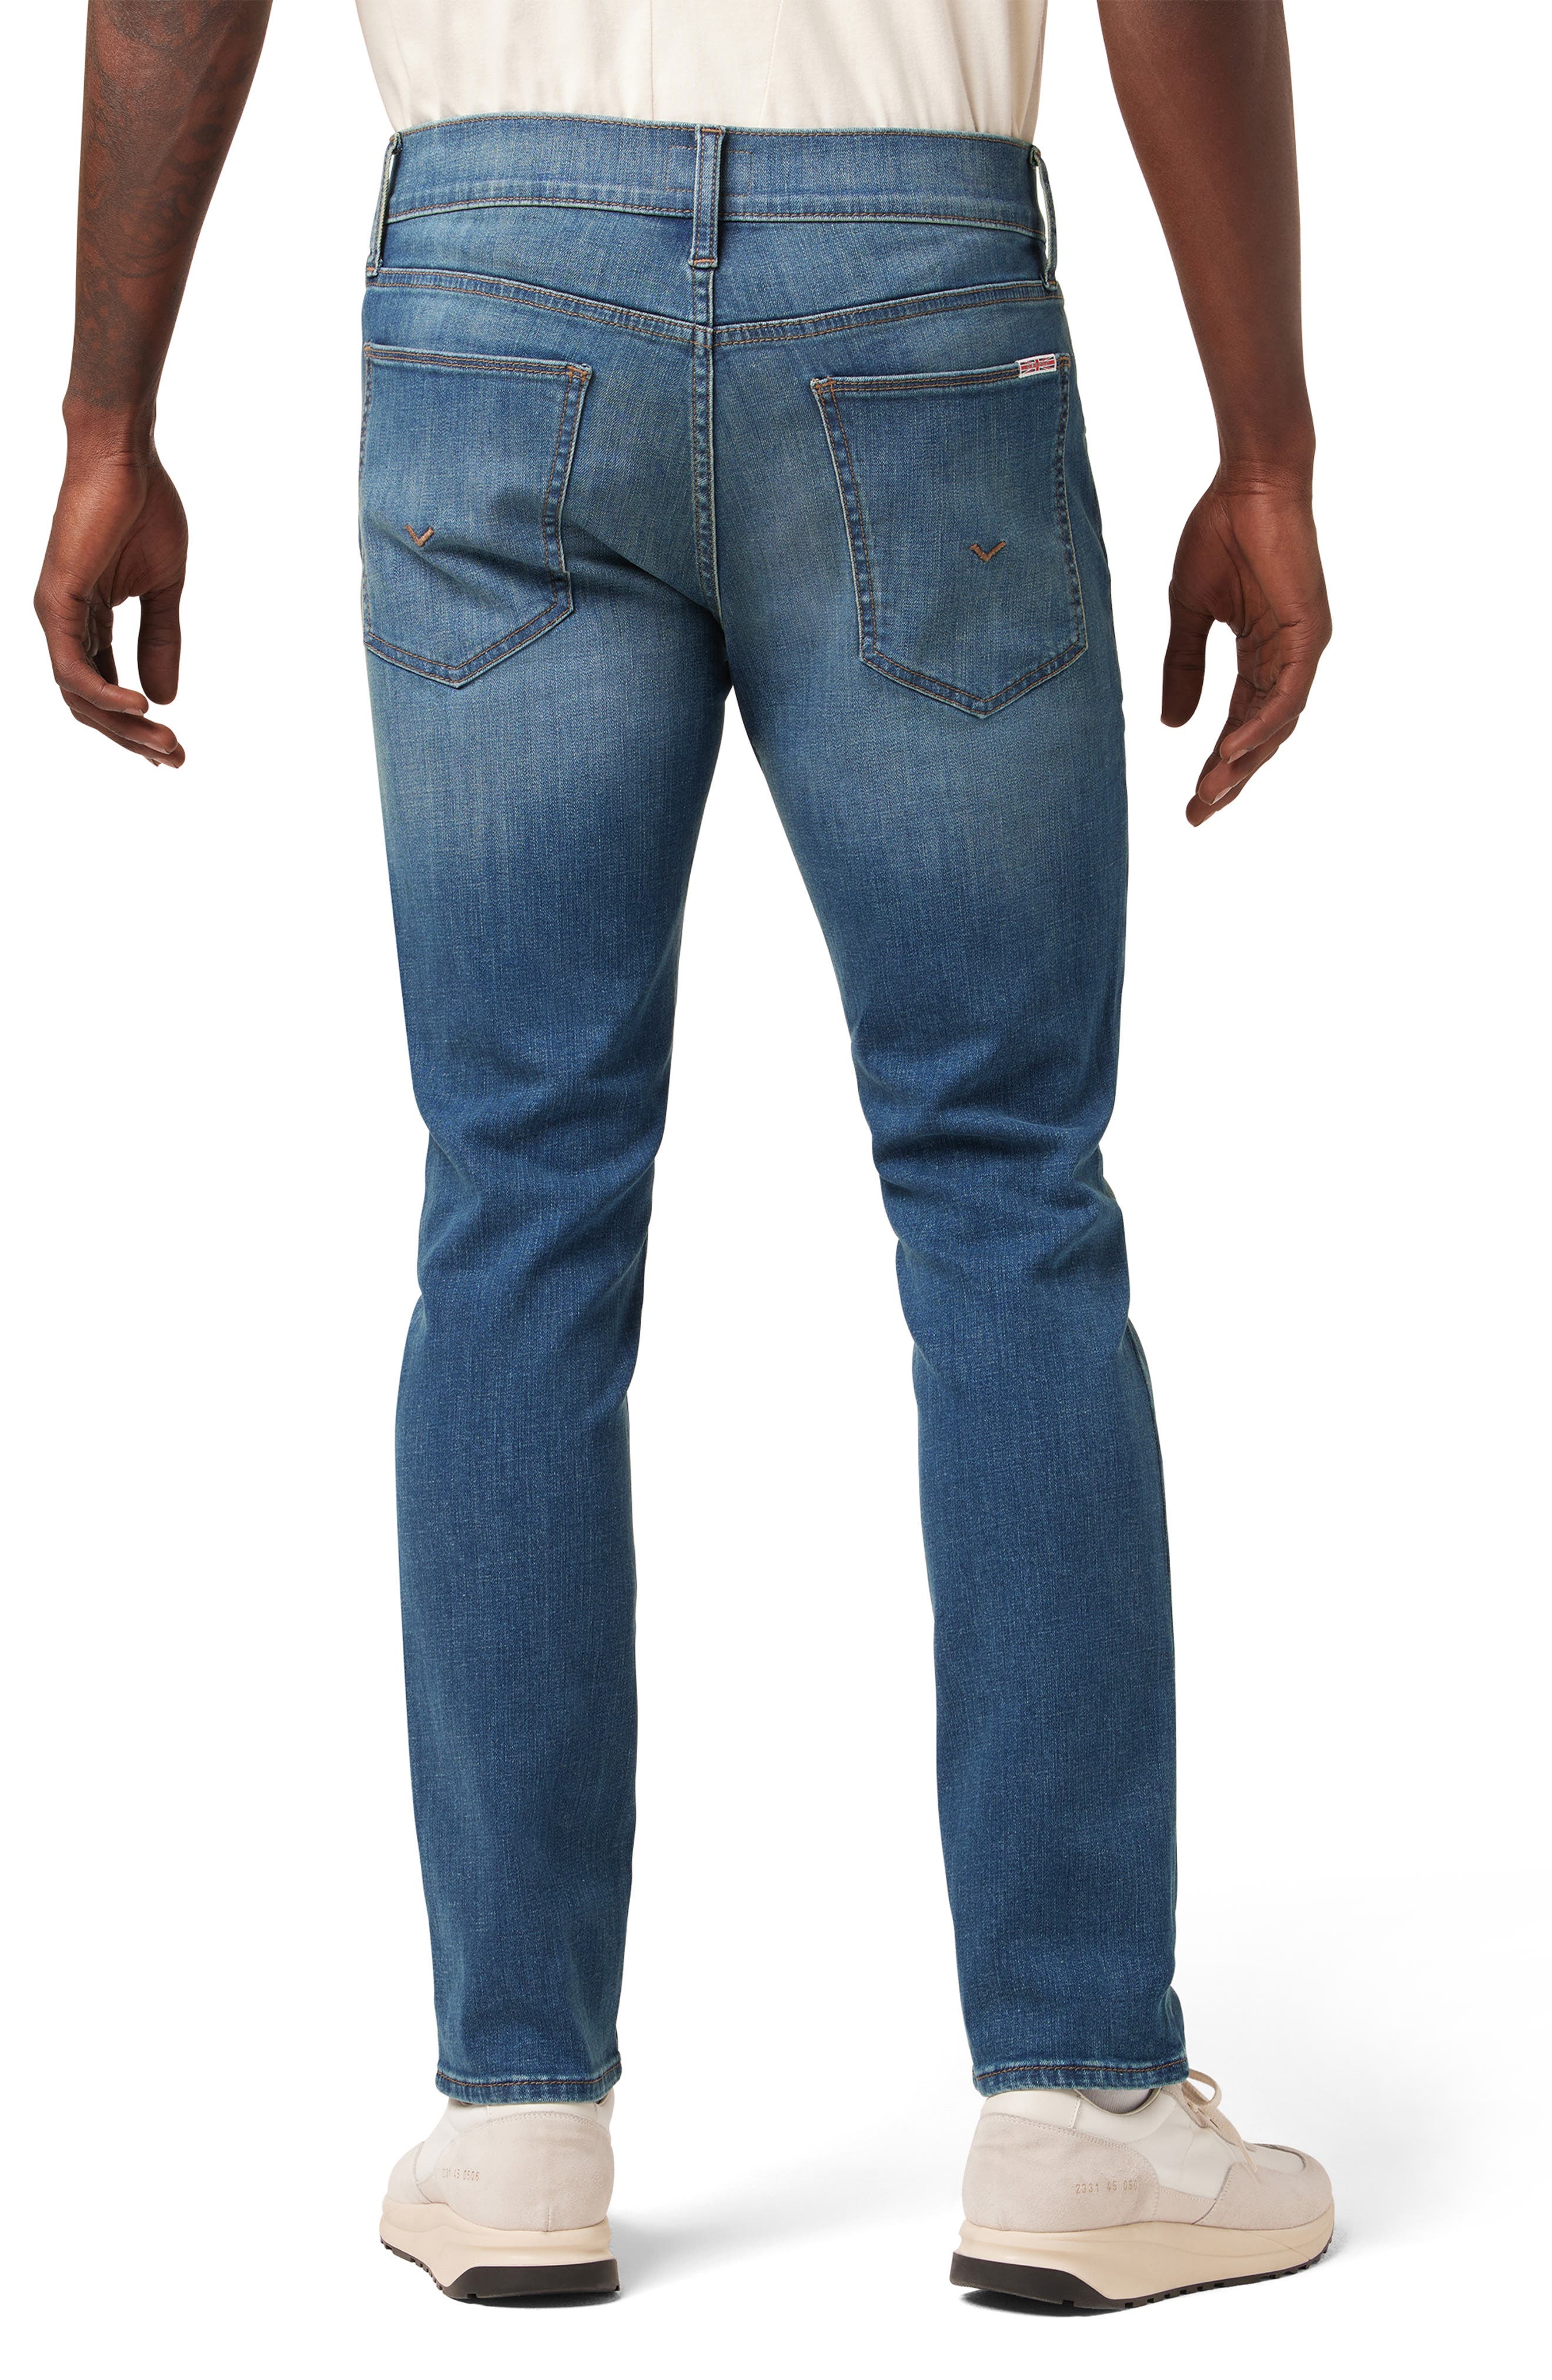 $198 NWT Hudson Blake Slim Straight Leg Jeans in Prof Dark Wash Size 36 x 34 